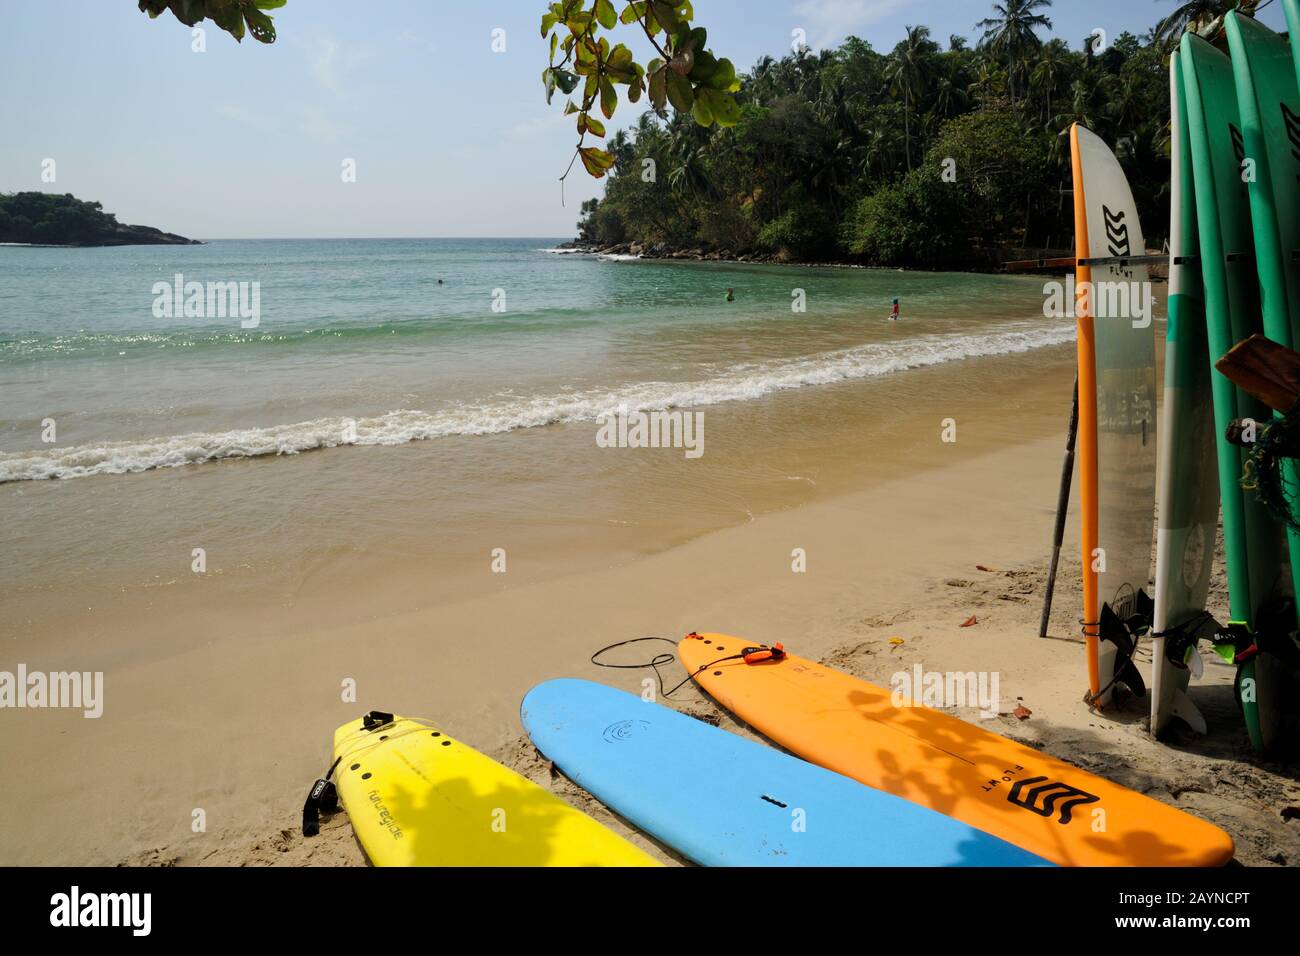 Sri Lanka, Hiriketiya plage, location de surf Banque D'Images